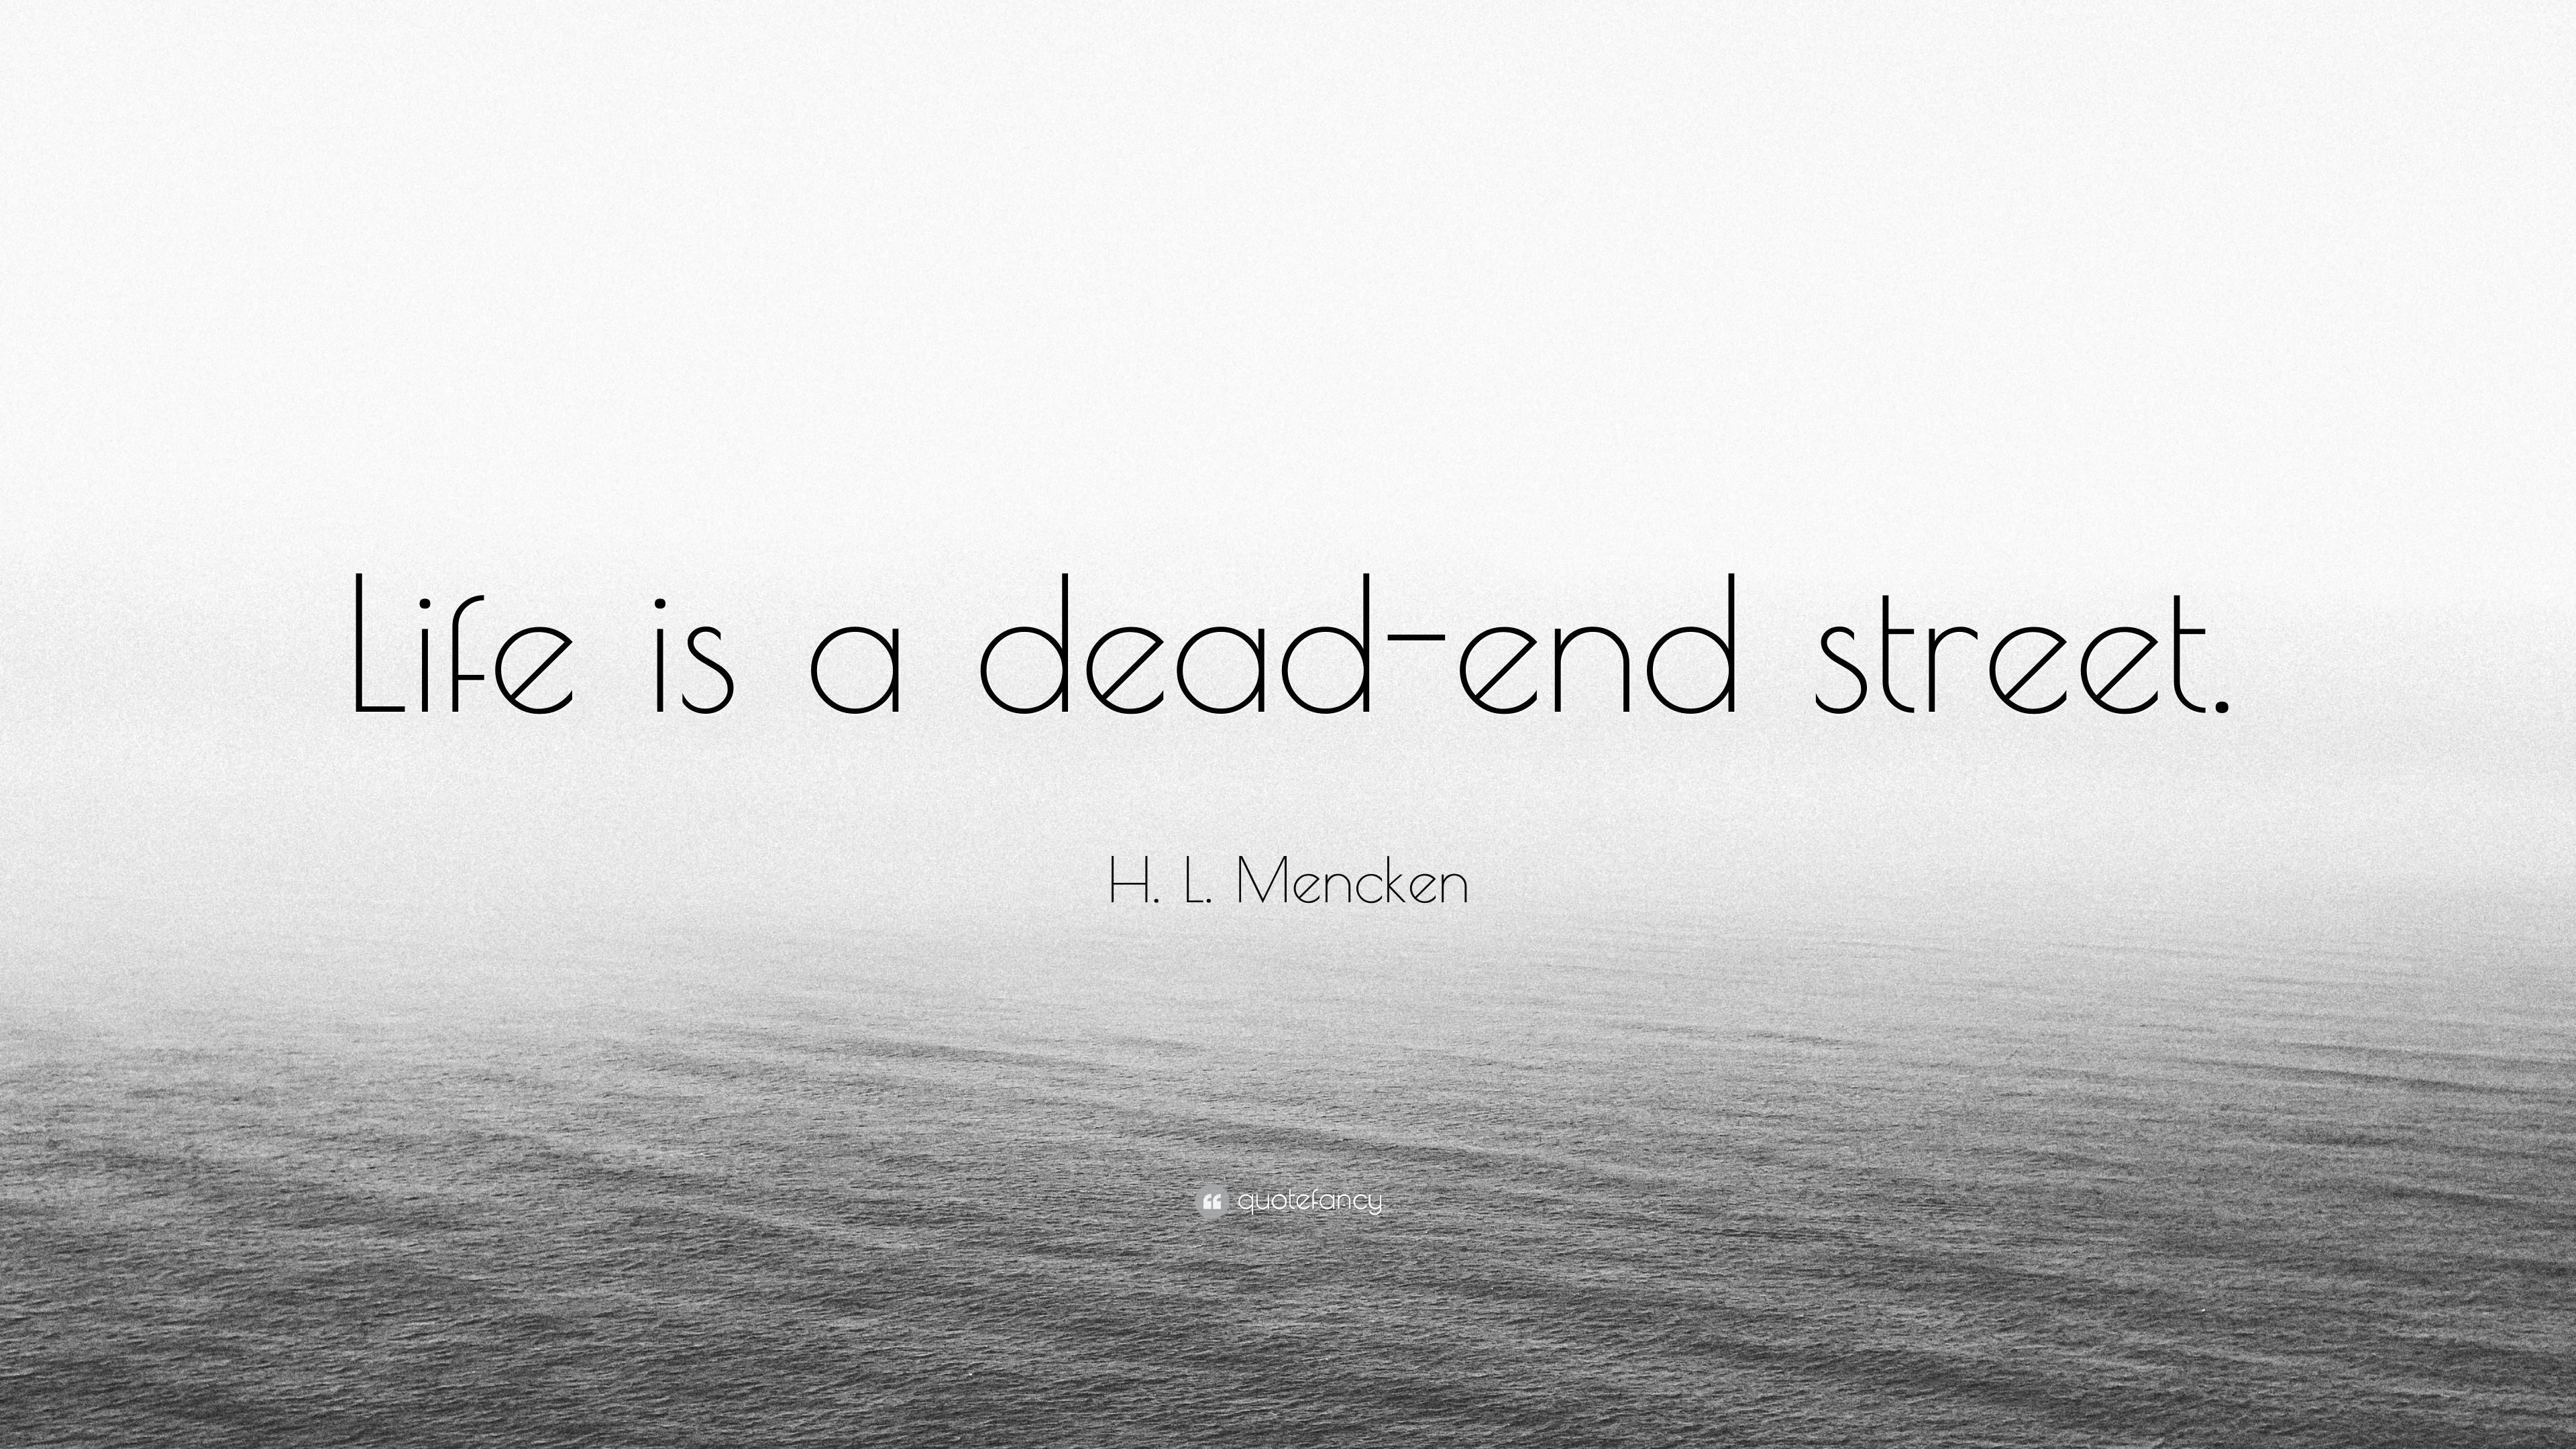 H. L. Mencken Quote: “Life Is A Dead End Street.” (6 Wallpaper)